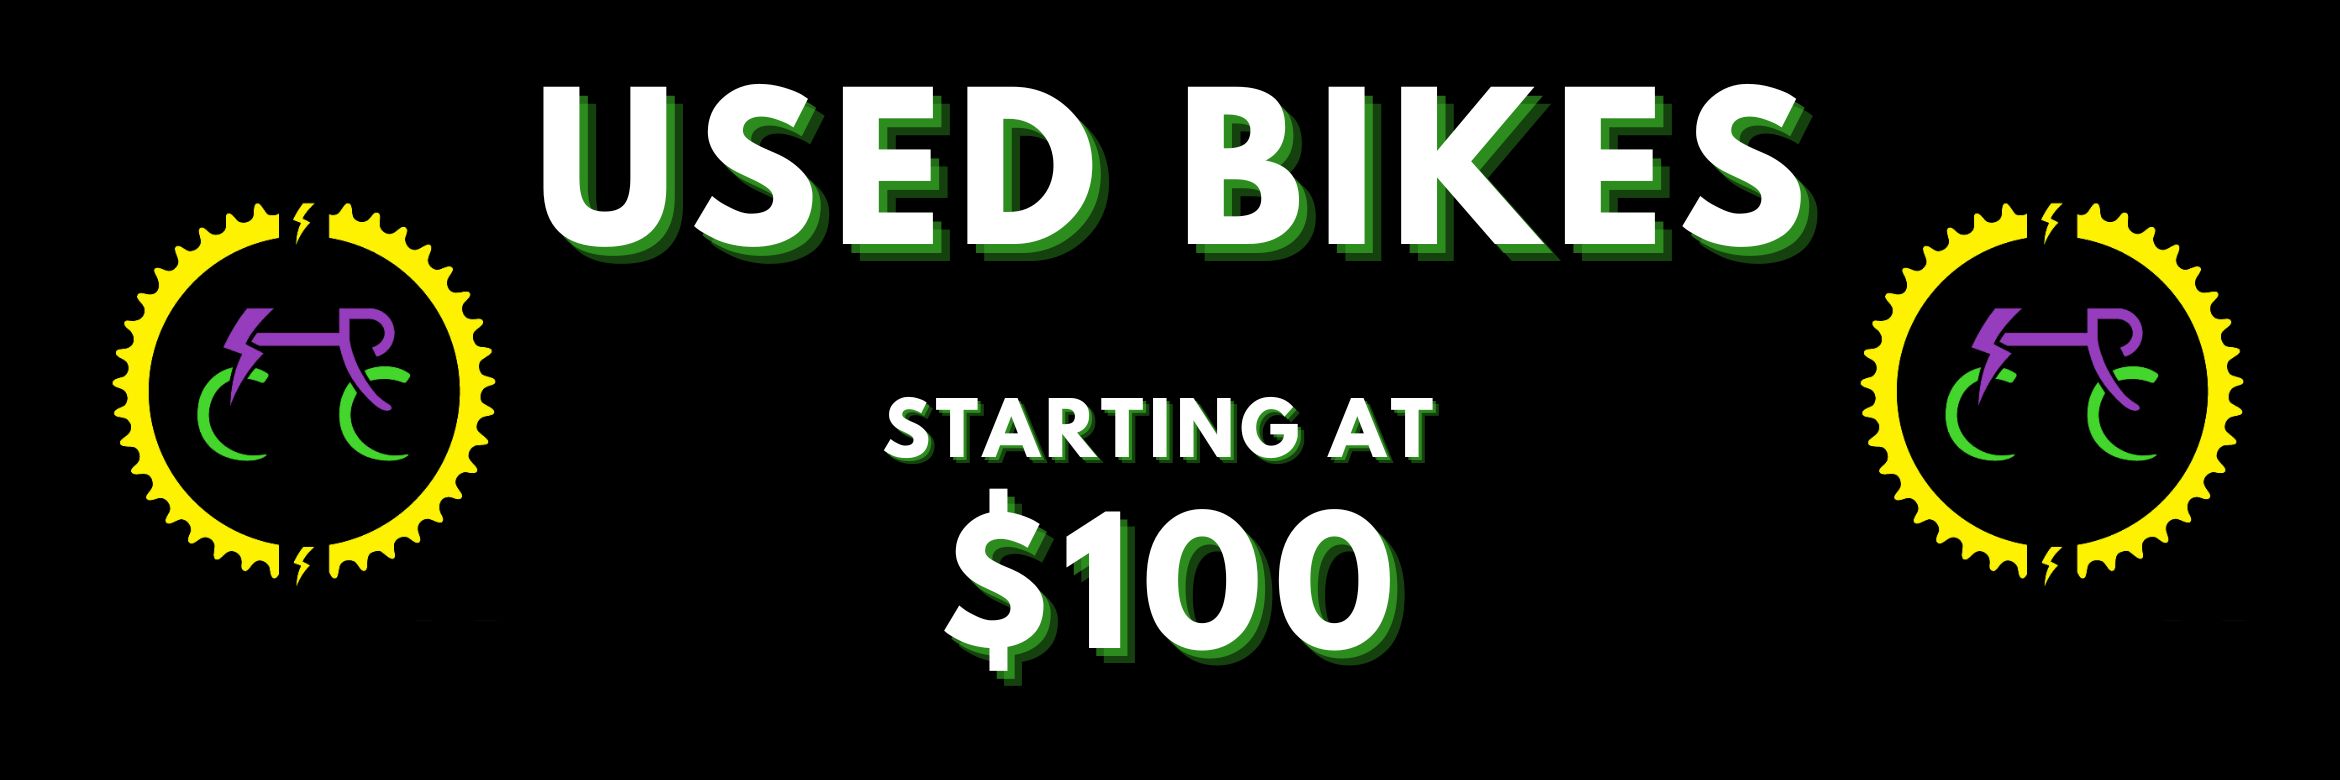 Used Bikes Starting at $100